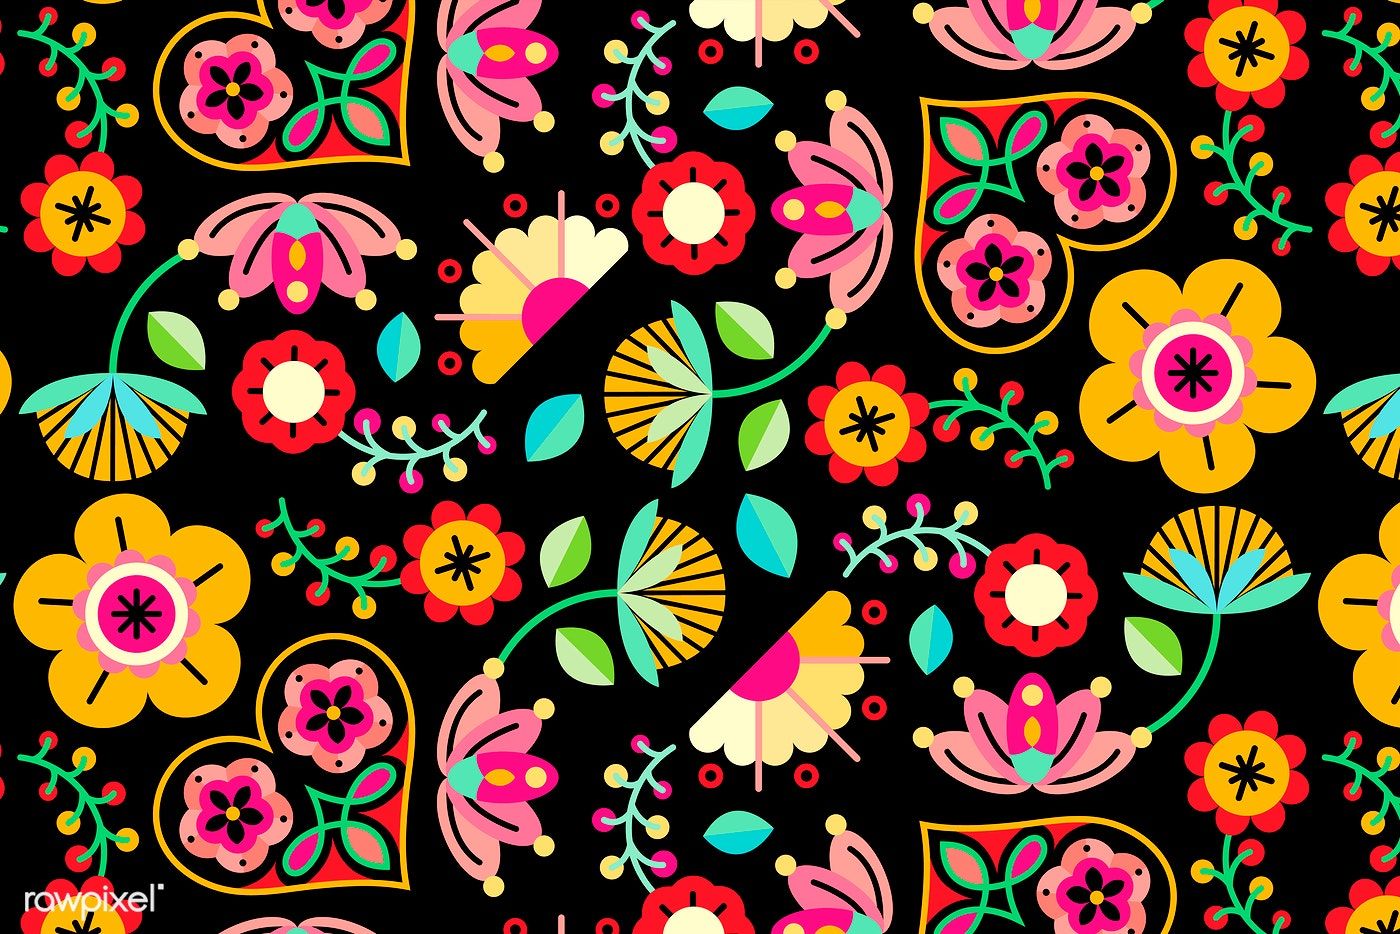 Download premium vector of Flowers folk art patterned on black